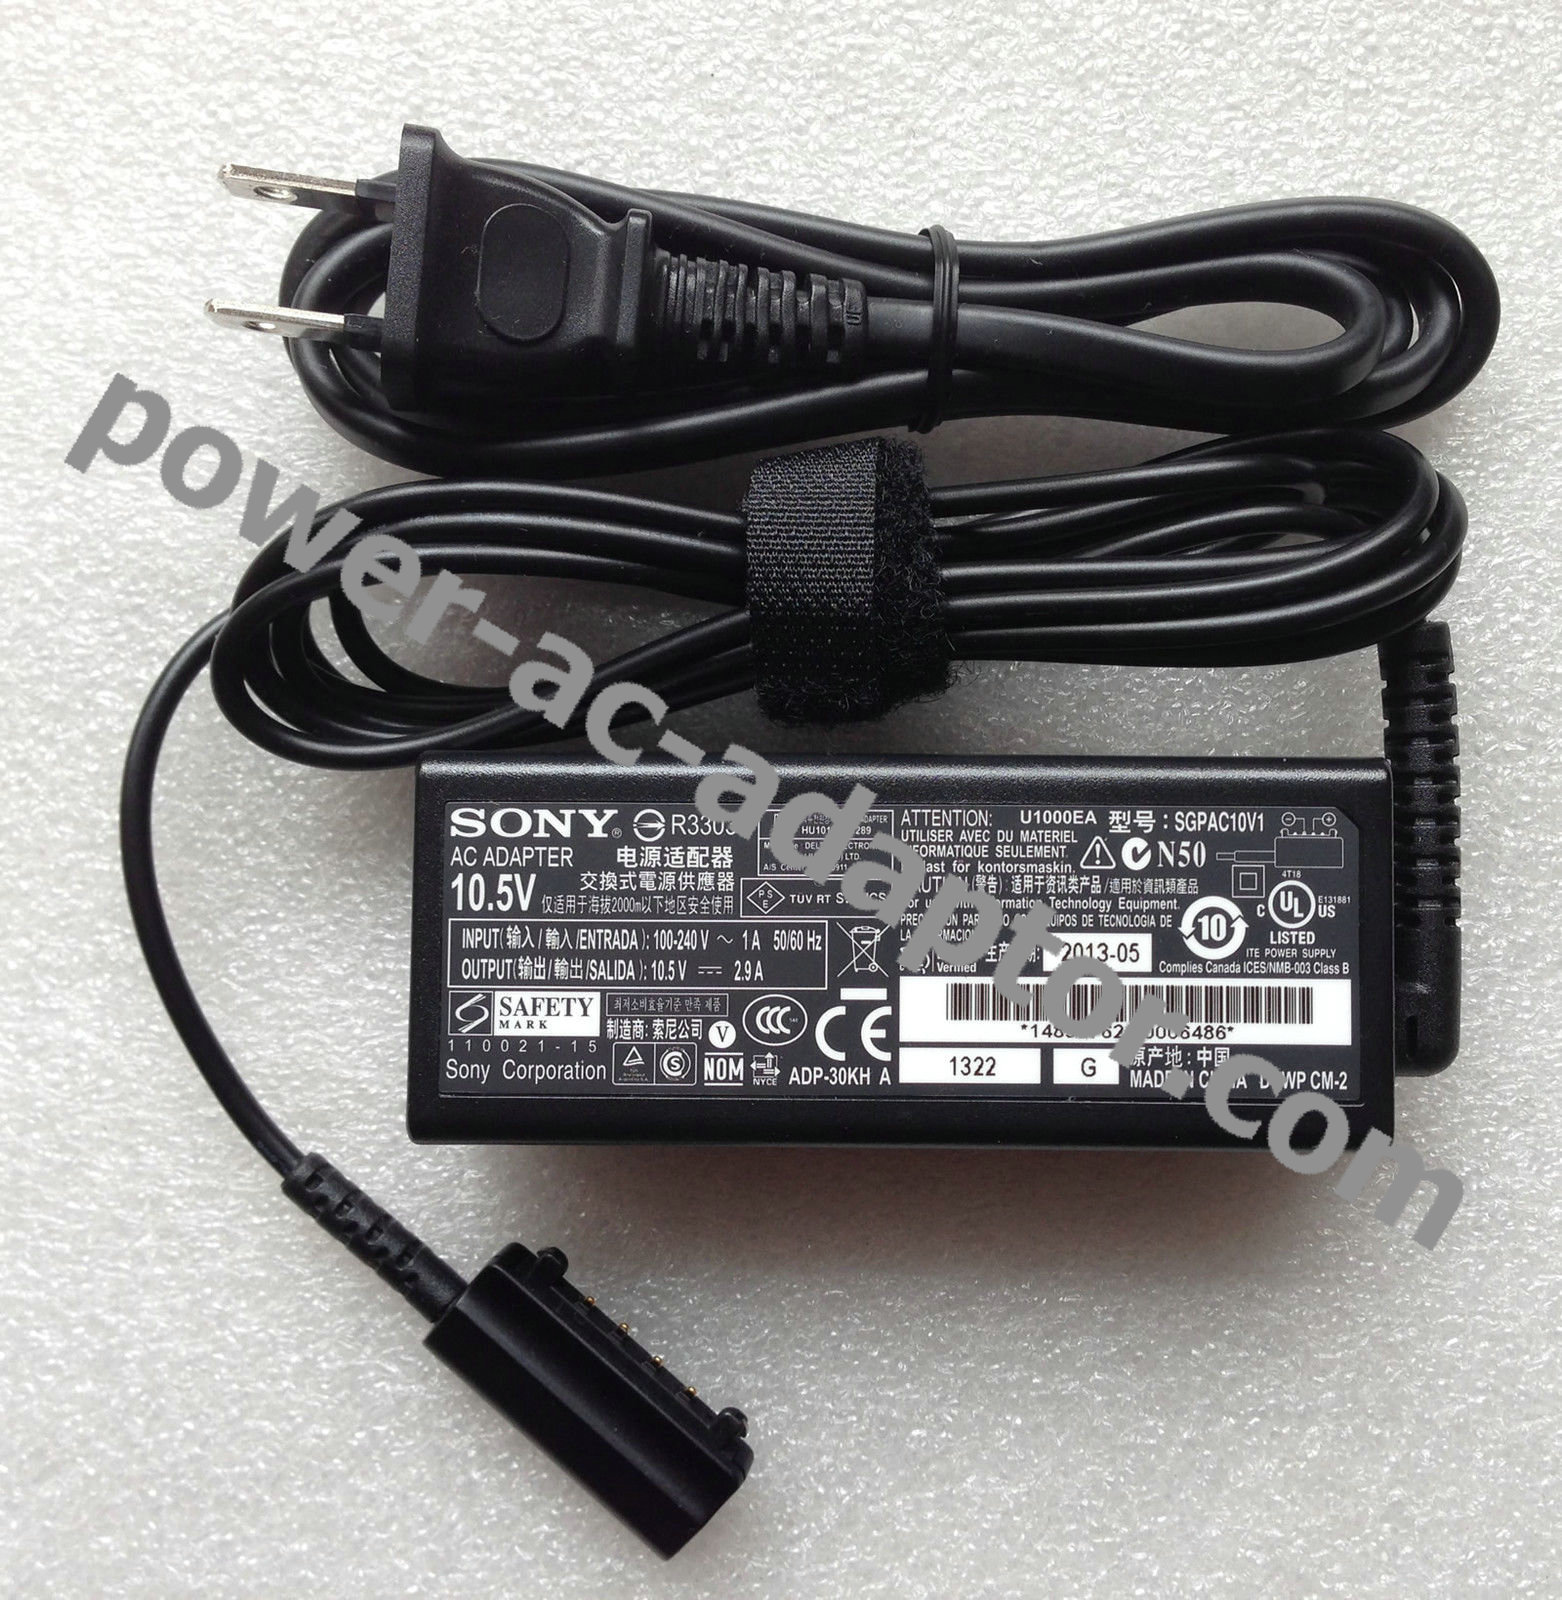 Genuine Sony SGPT111CAS SGPAC10V1 ADP-30KH A AC Adapter Cord